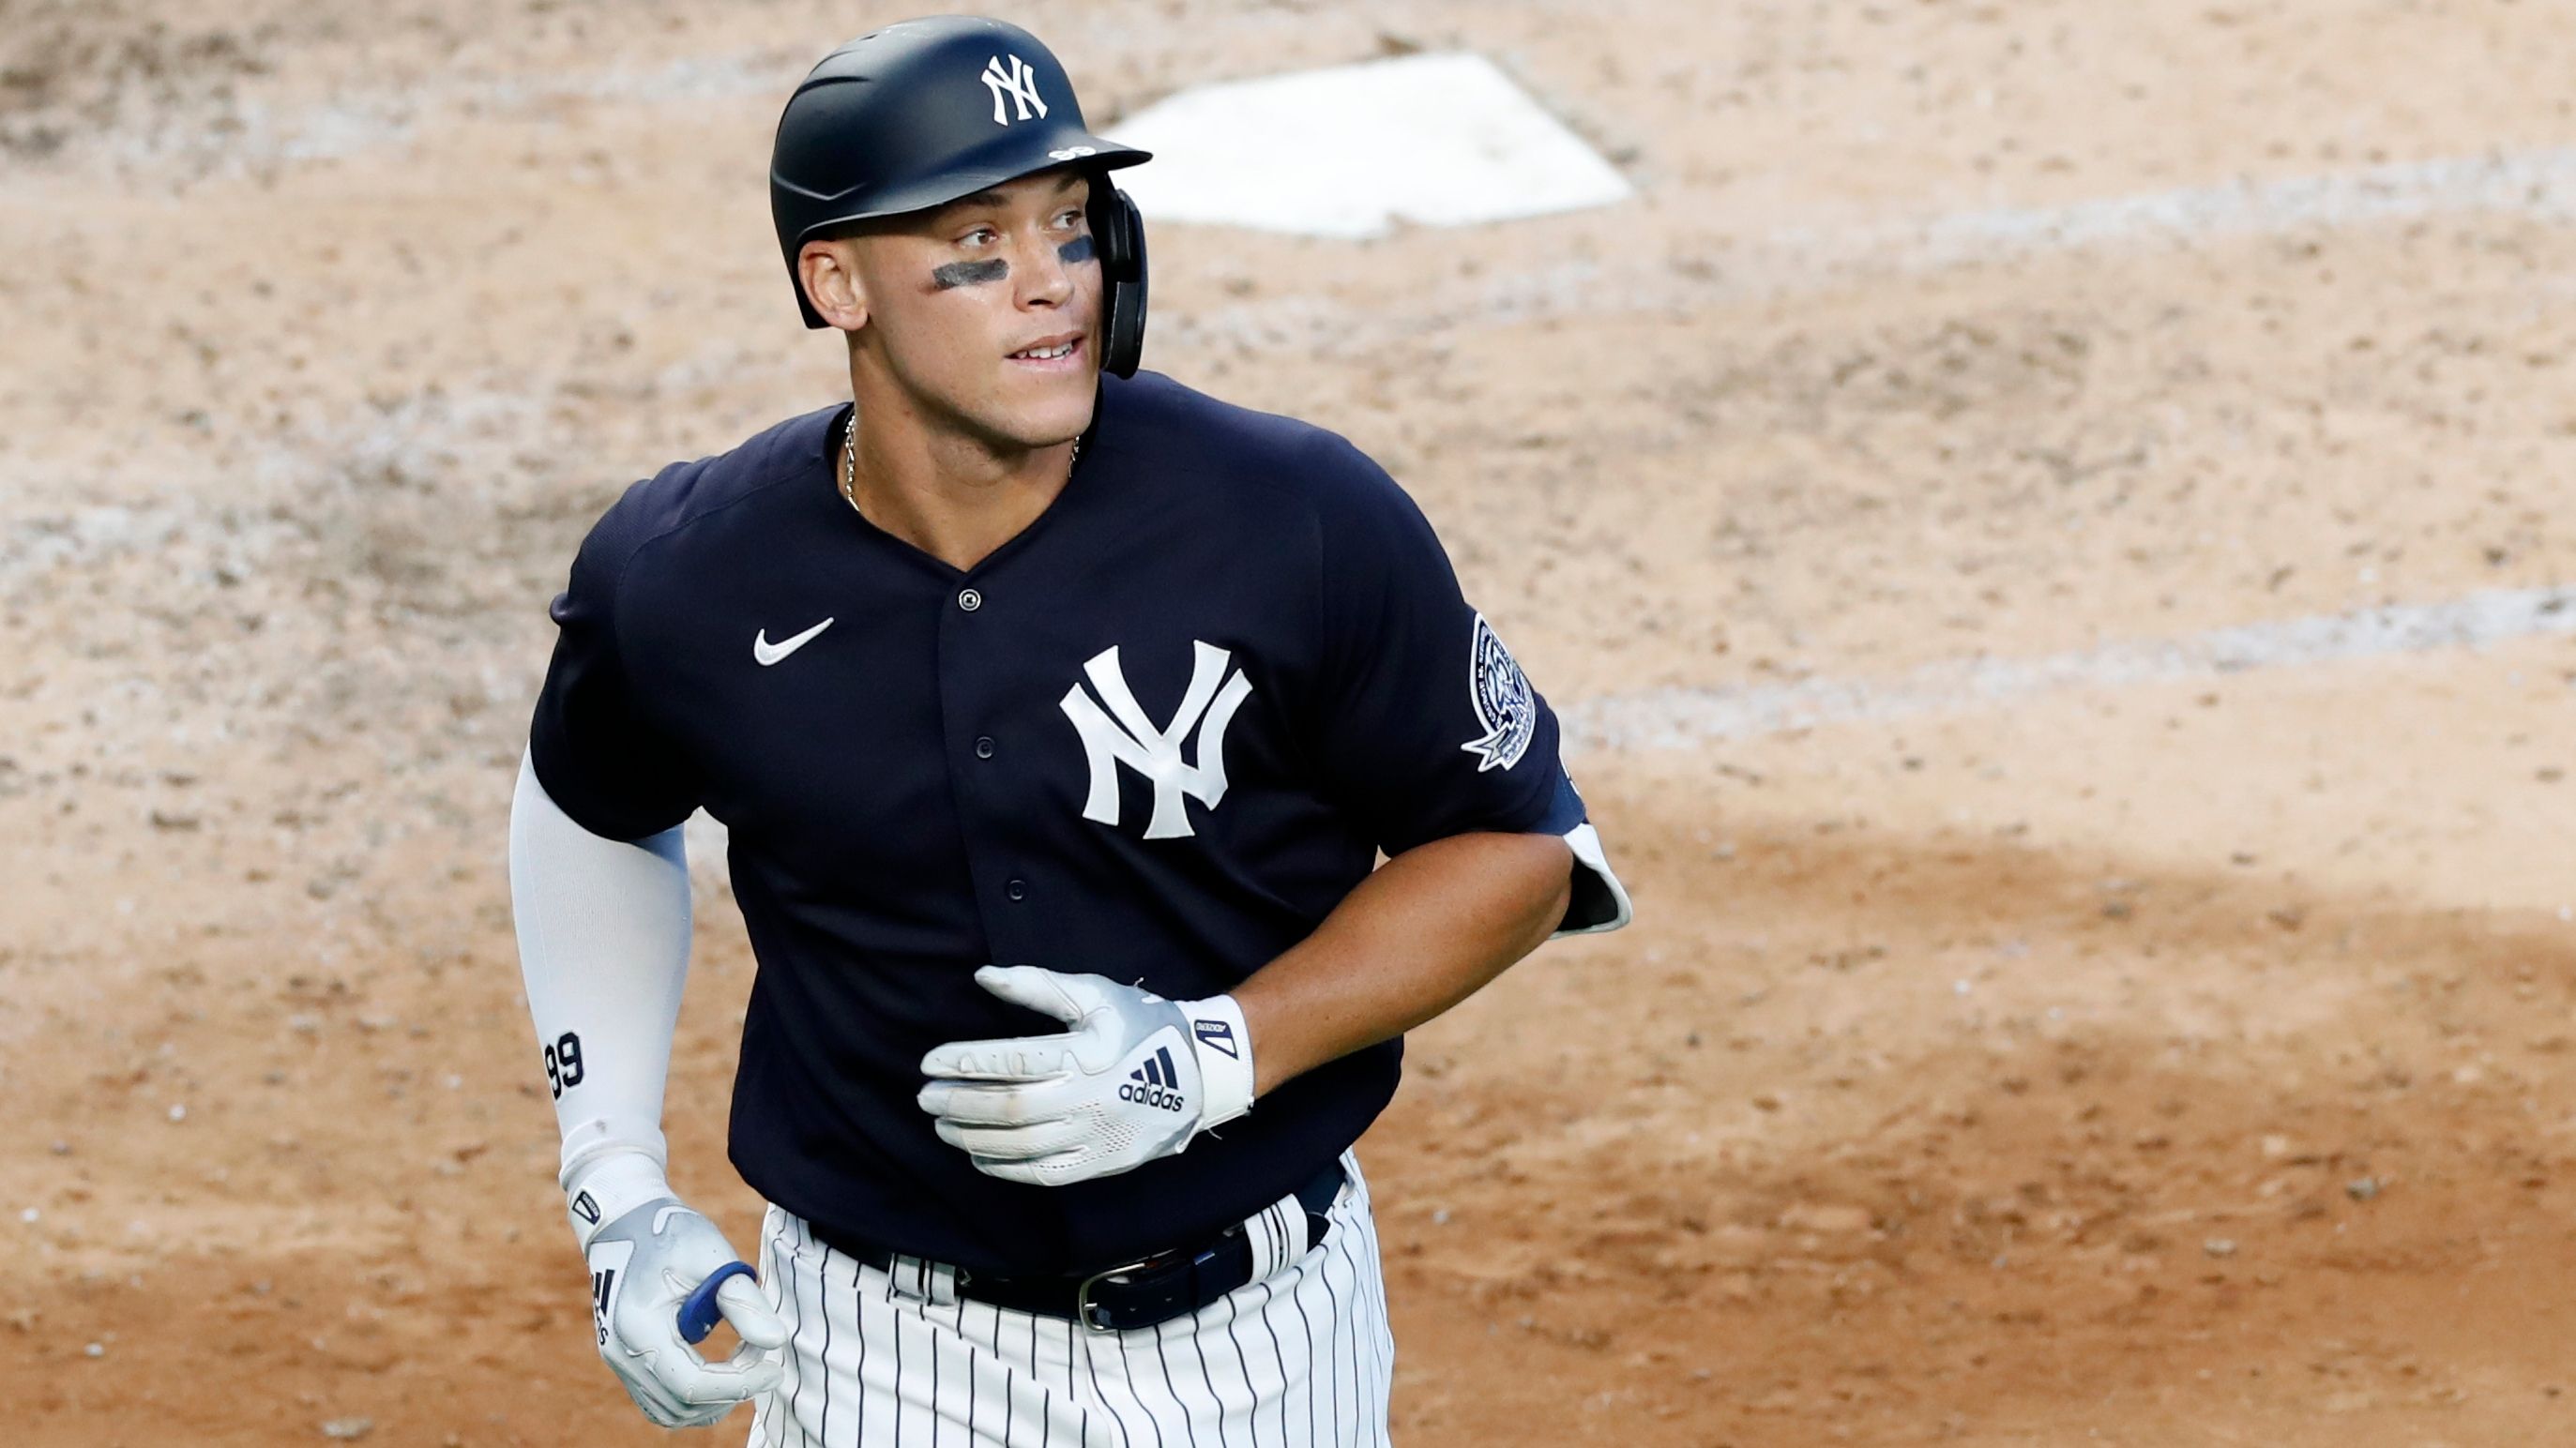 Aaron Judge joins fellow Yankees slugger Giancarlo Stanton on